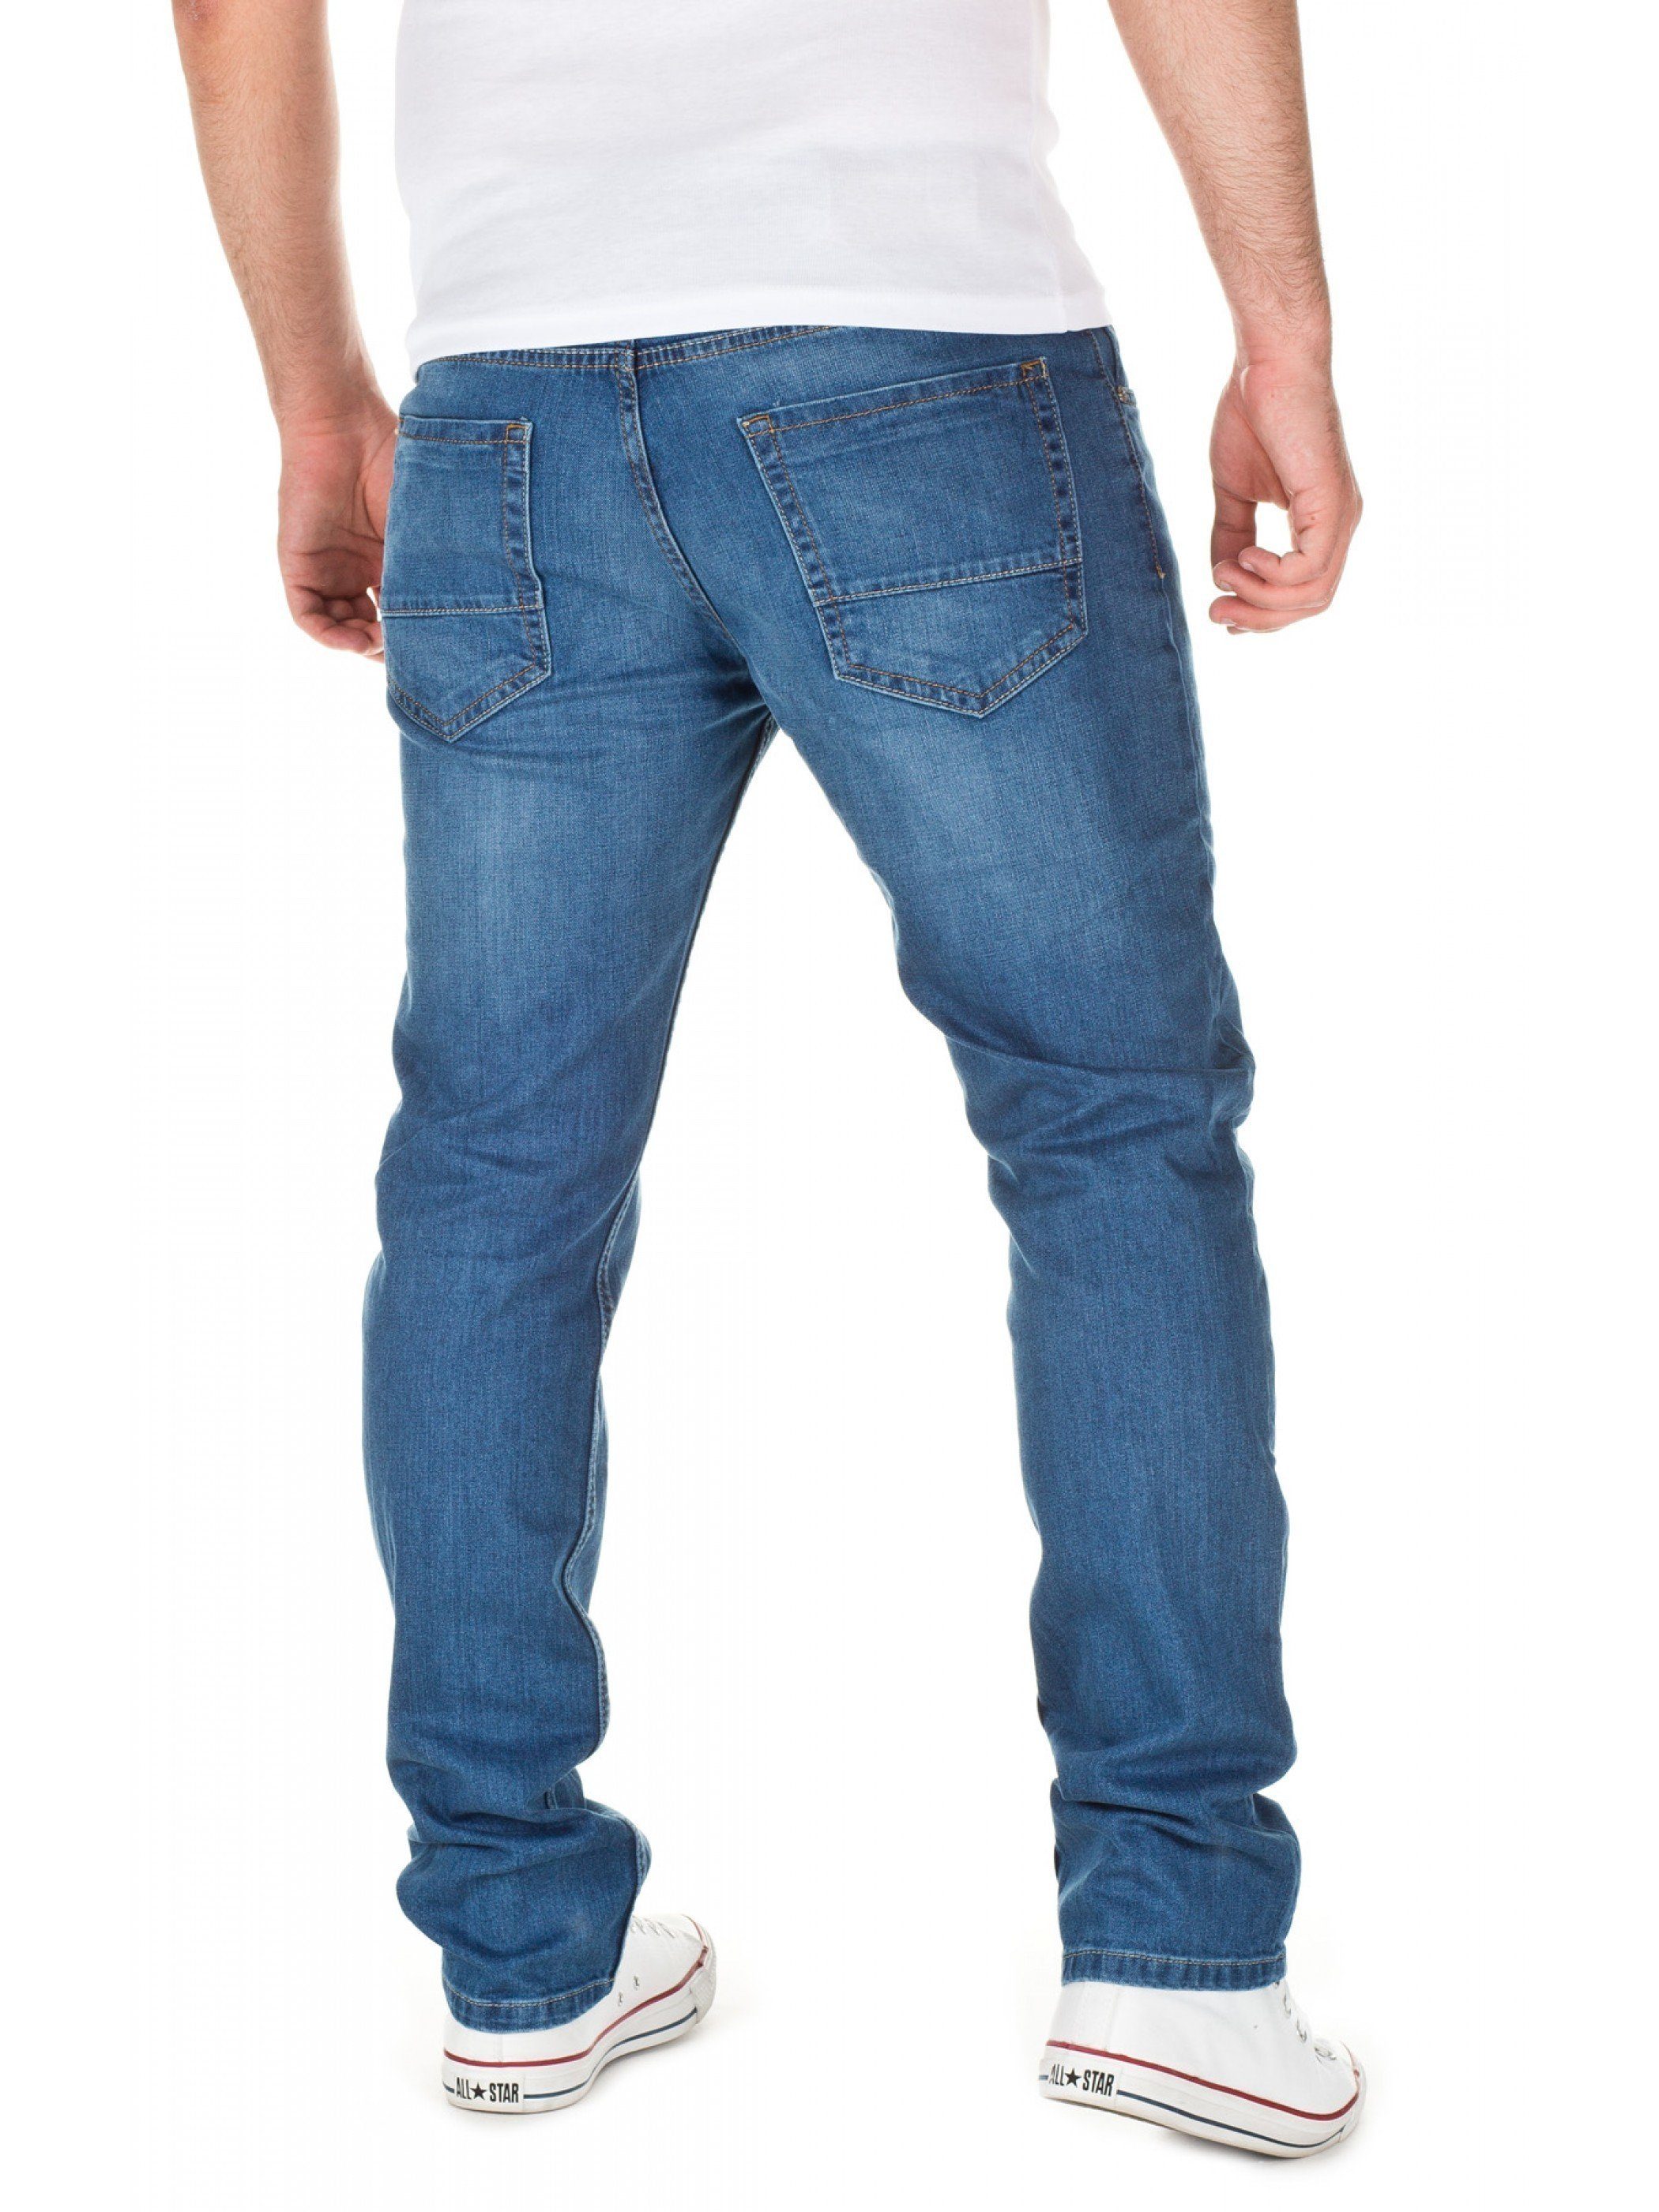 WOTEGA Slim-fit-Jeans (blue Travis Jeans indigo 3928) Blau